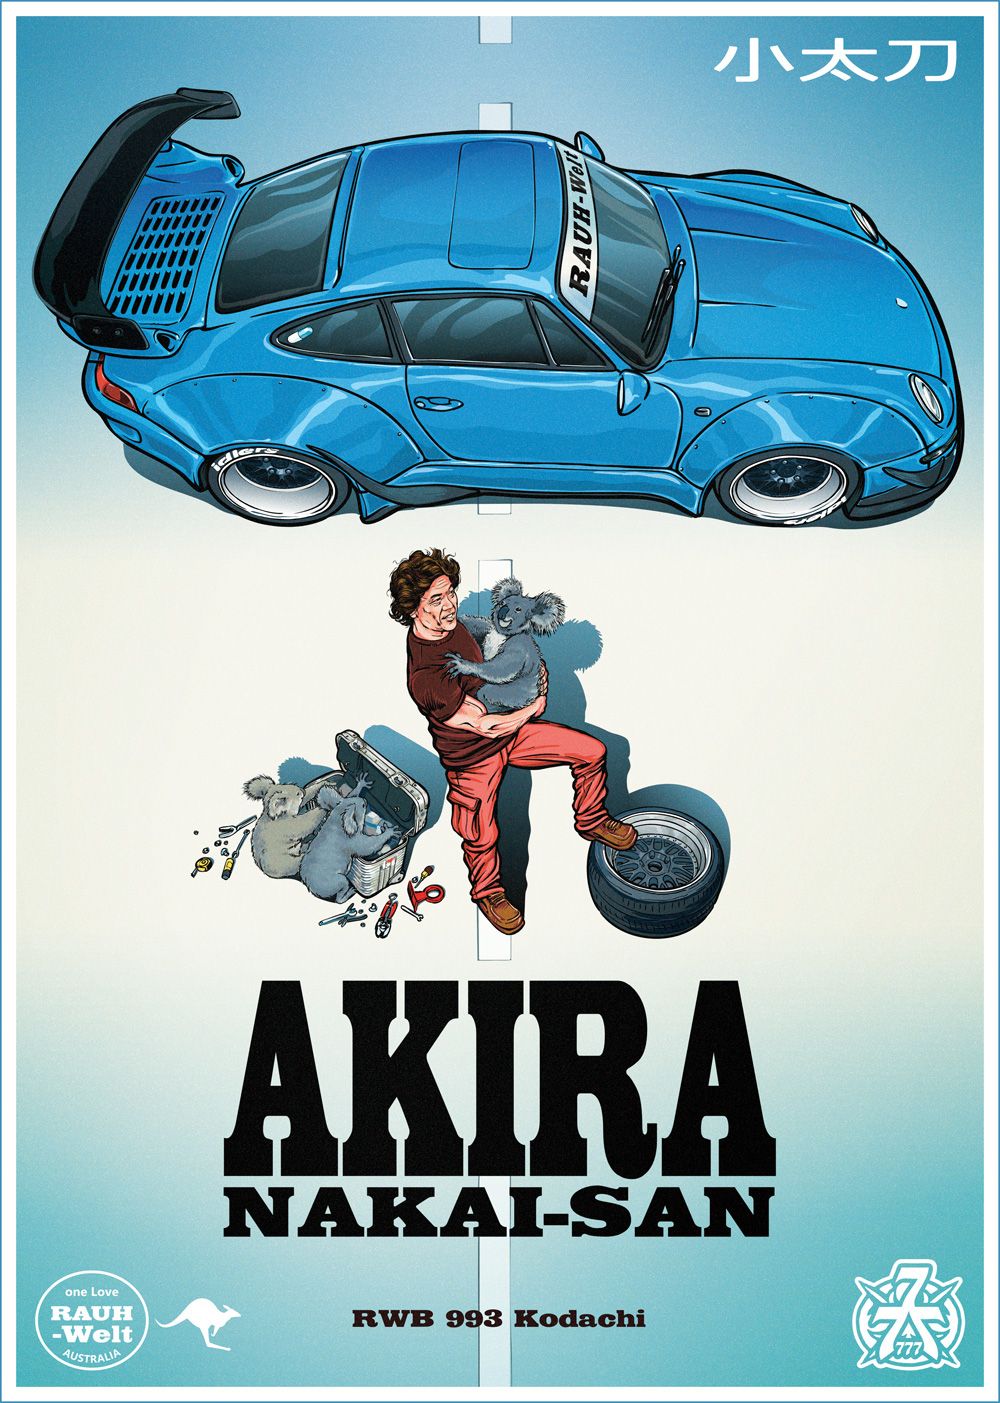 Tribute To Legendary Anime Akira And Fantastic Work Of Akira Nakai San From RAUH Welt Begriff. Akira Poster, Art Cars, Car Artwork